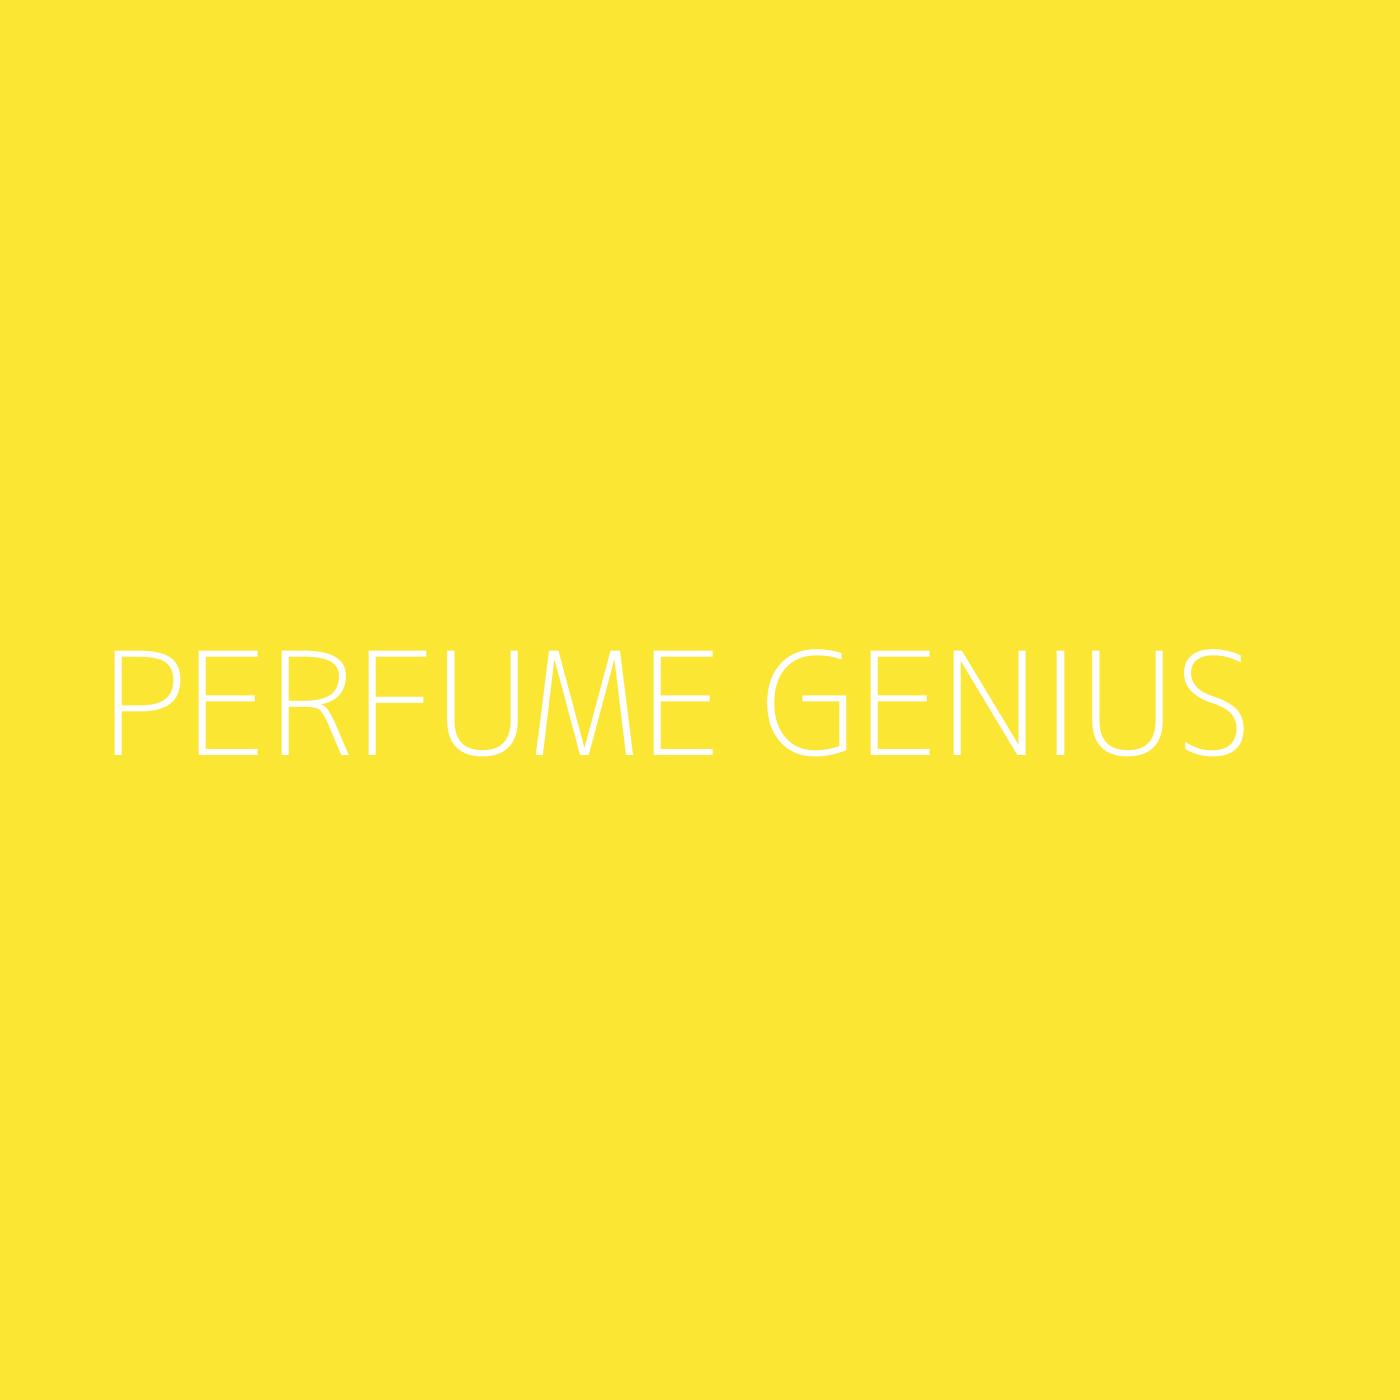 Perfume Genius Playlist Artwork